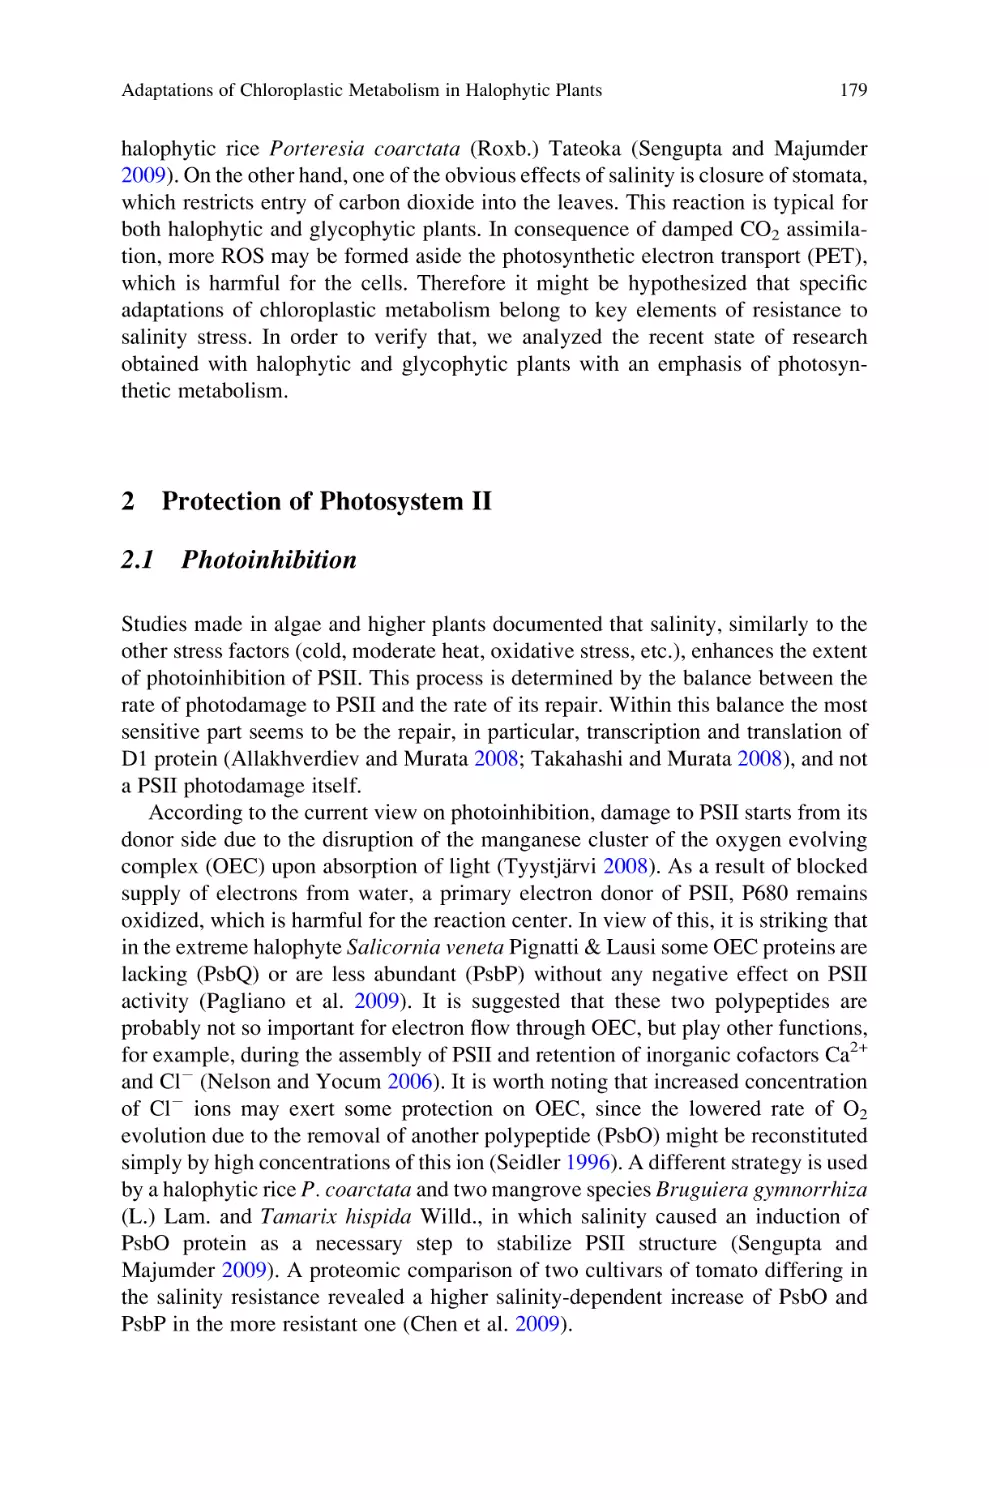 2 Protection of Photosystem II
2.1 Photoinhibition